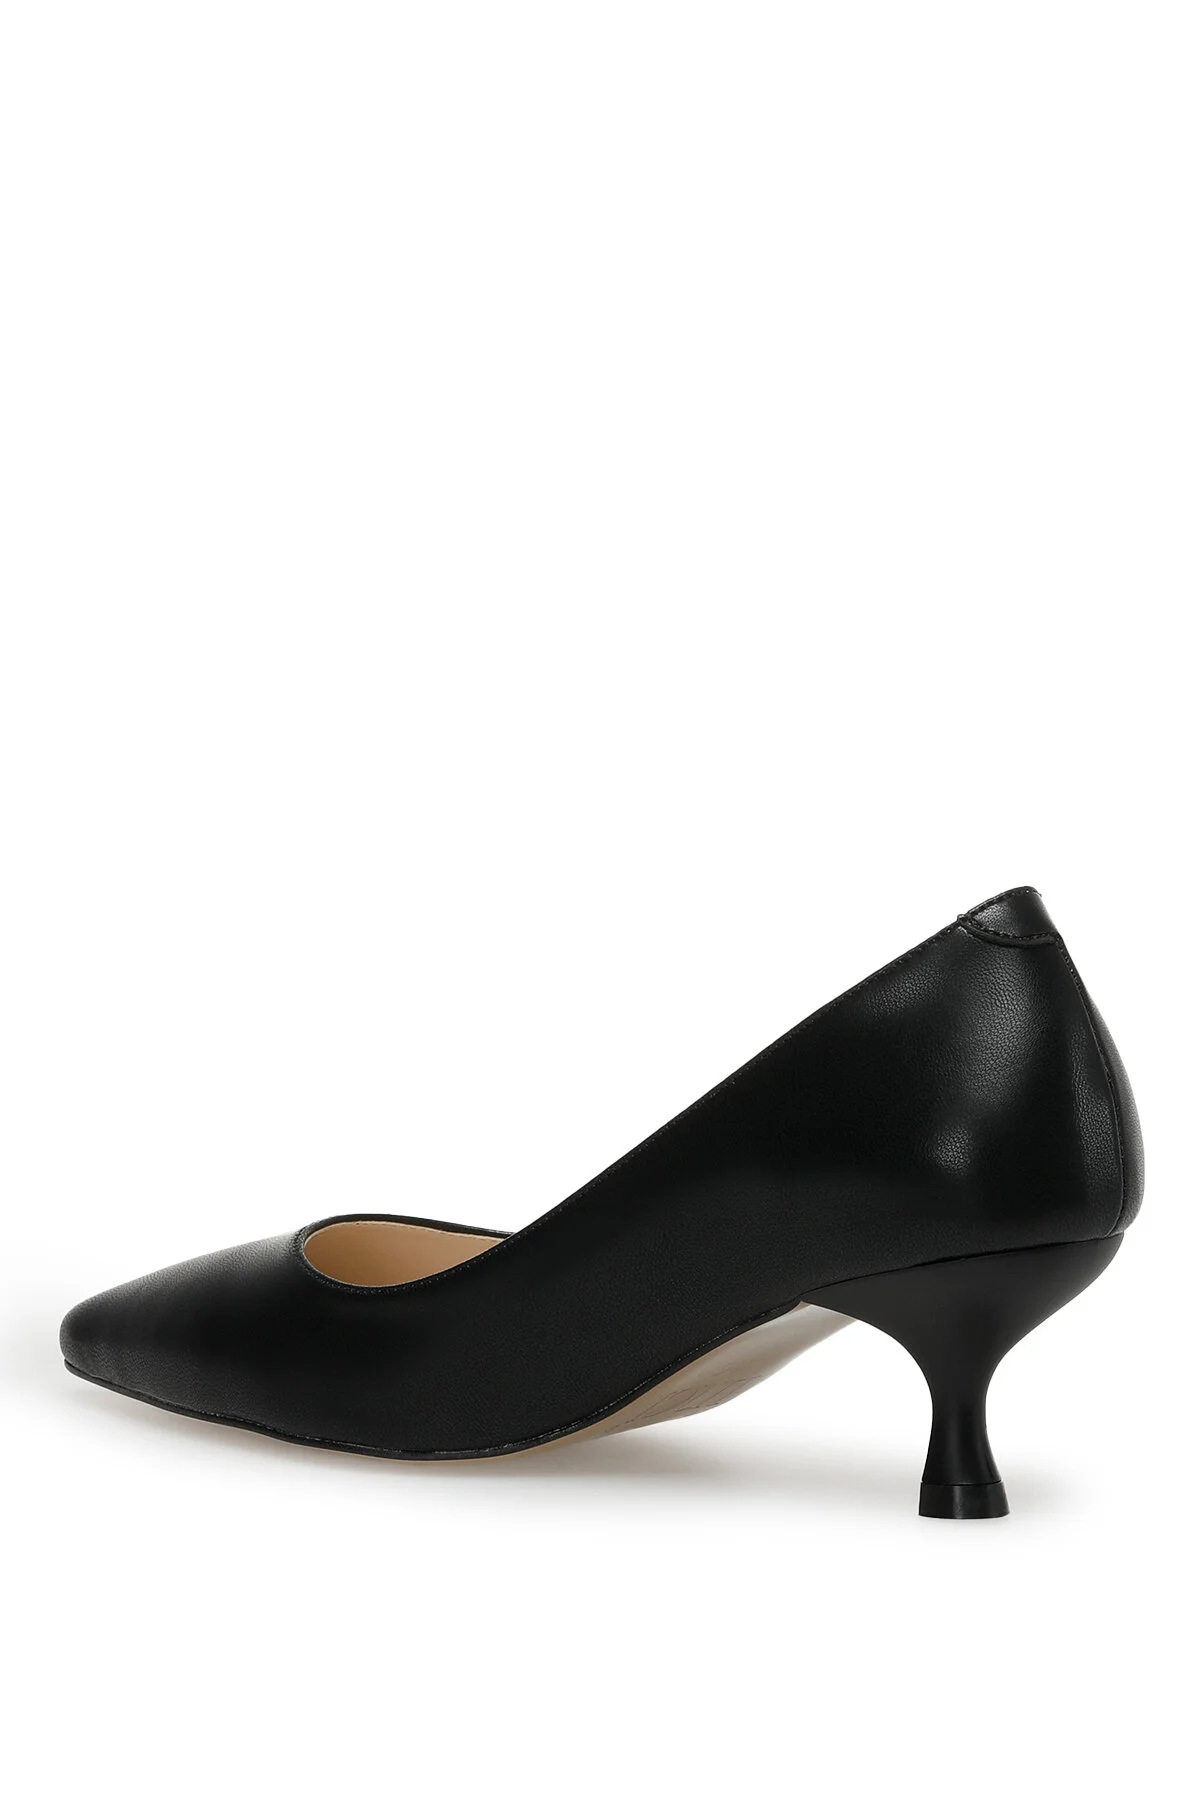 TRUDY 3FX Kadın Topuklu Ayakkabı-Siyah